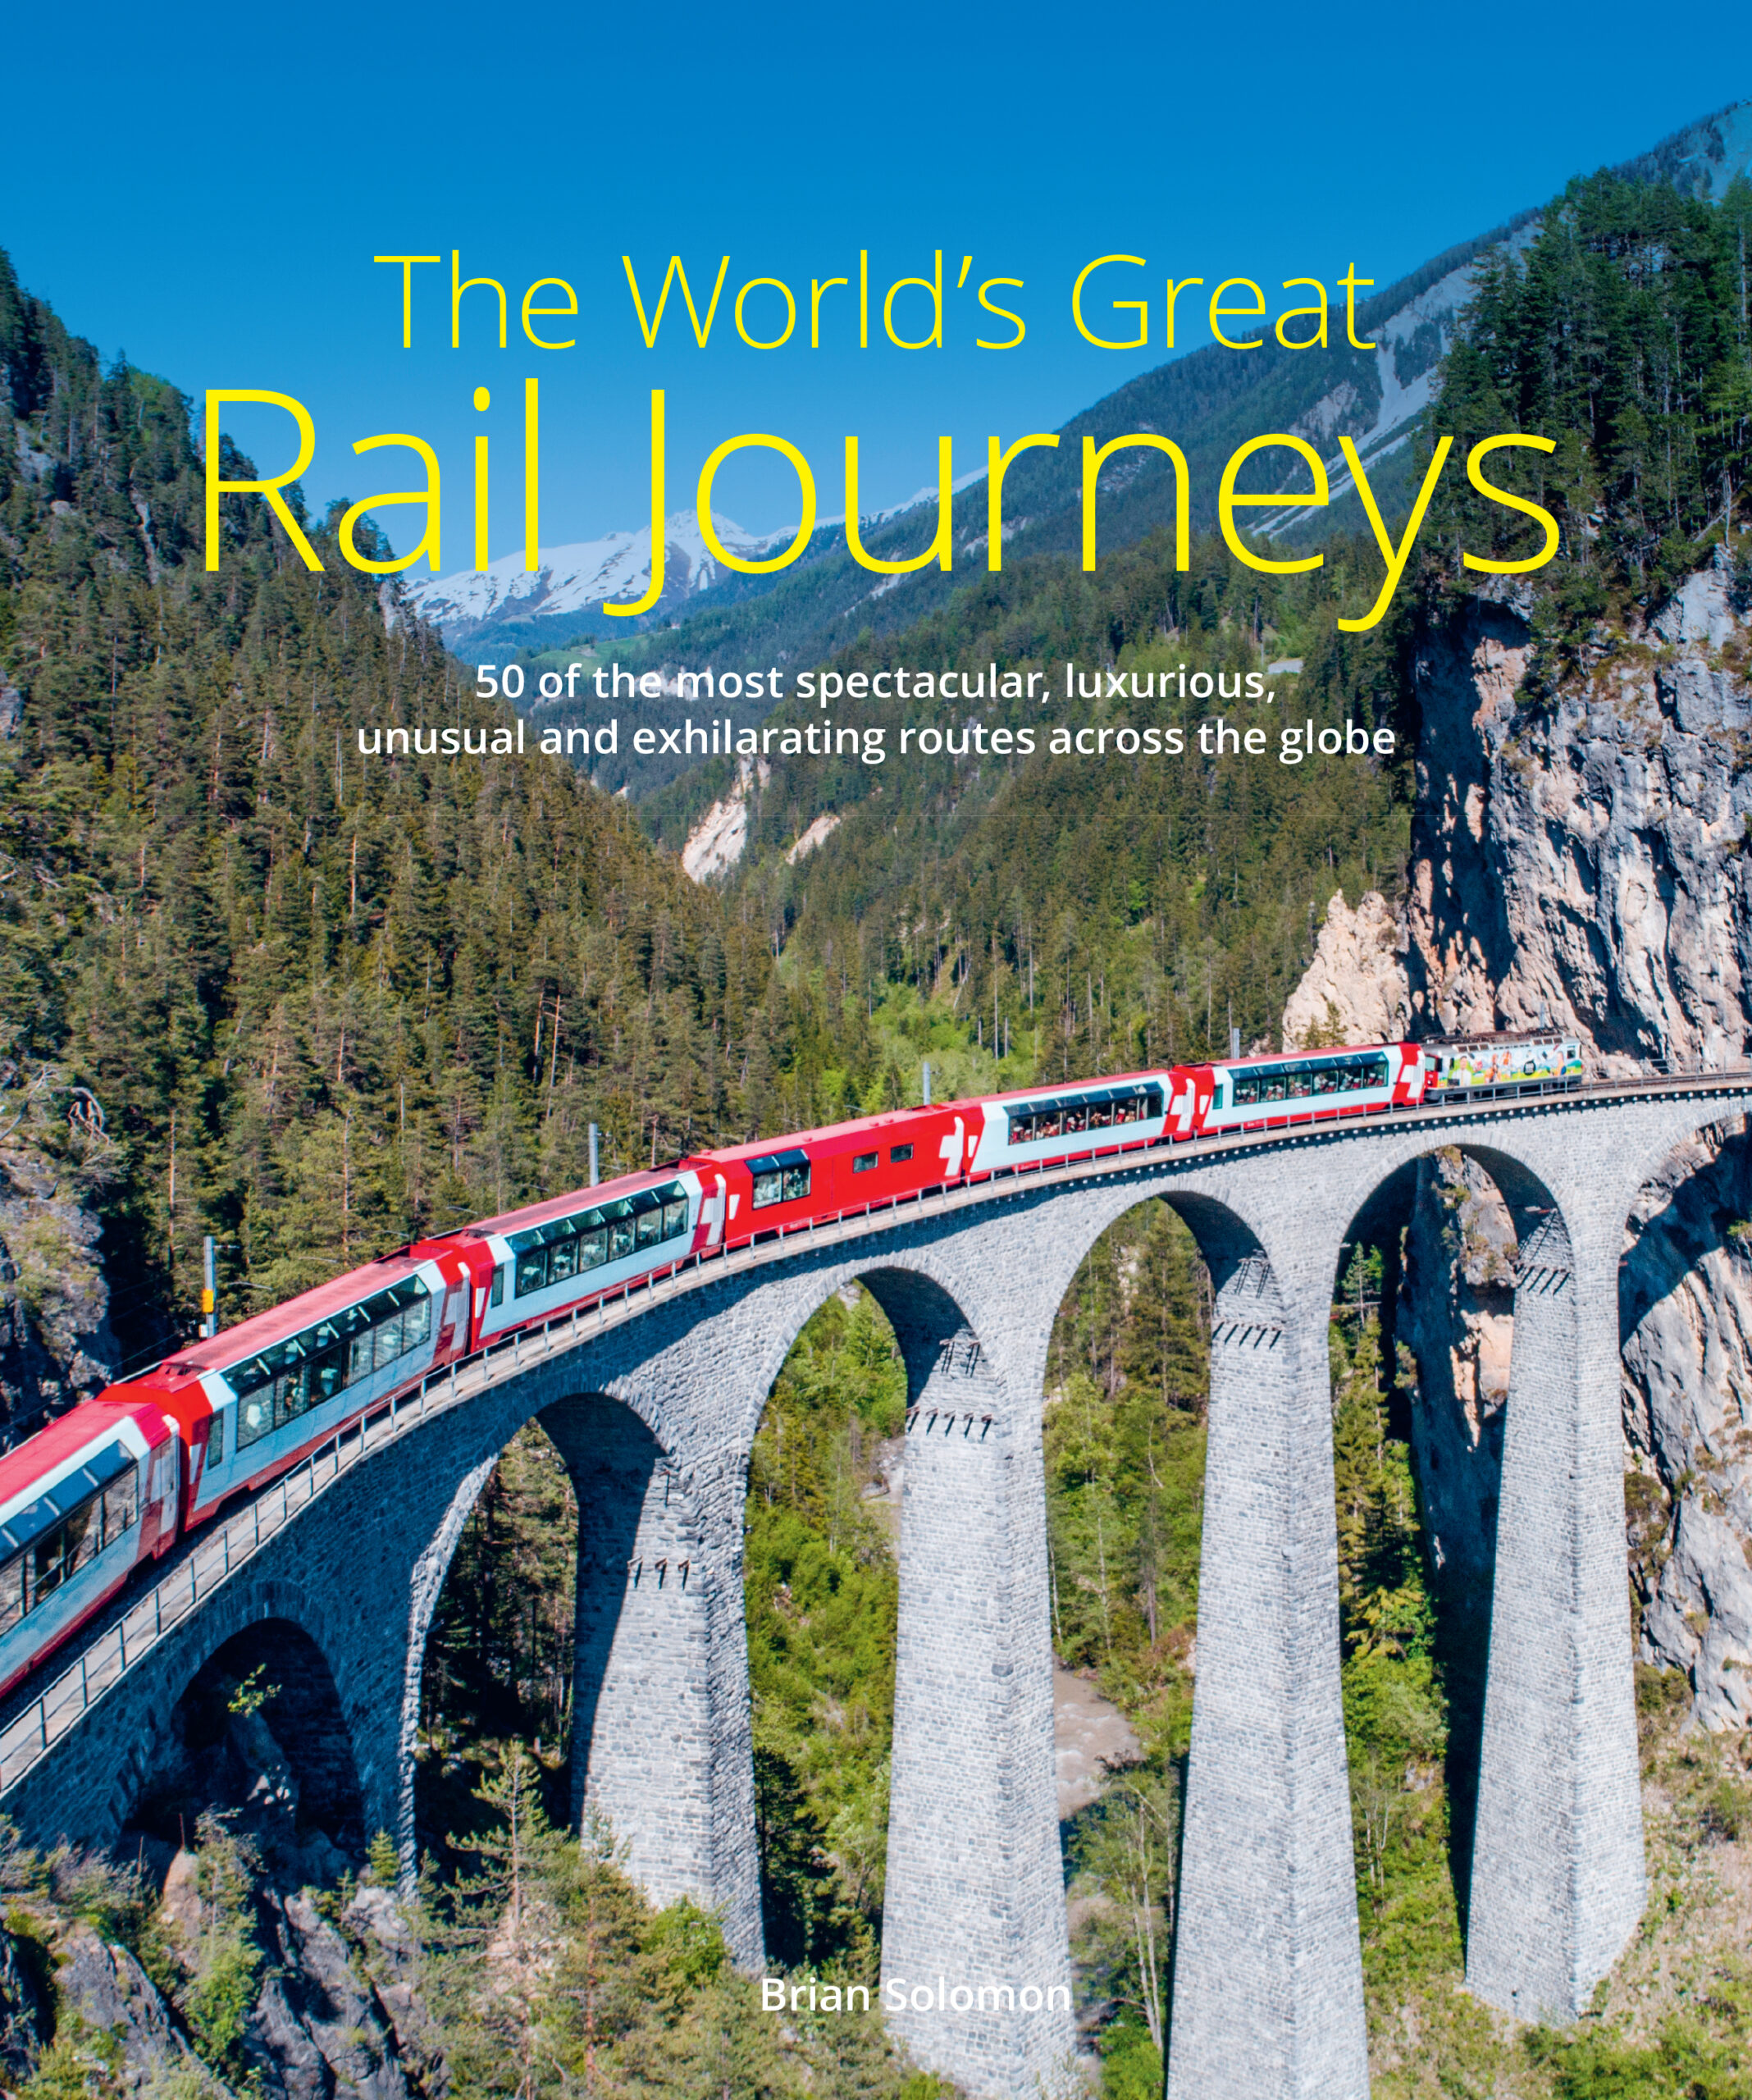 national rail past journeys